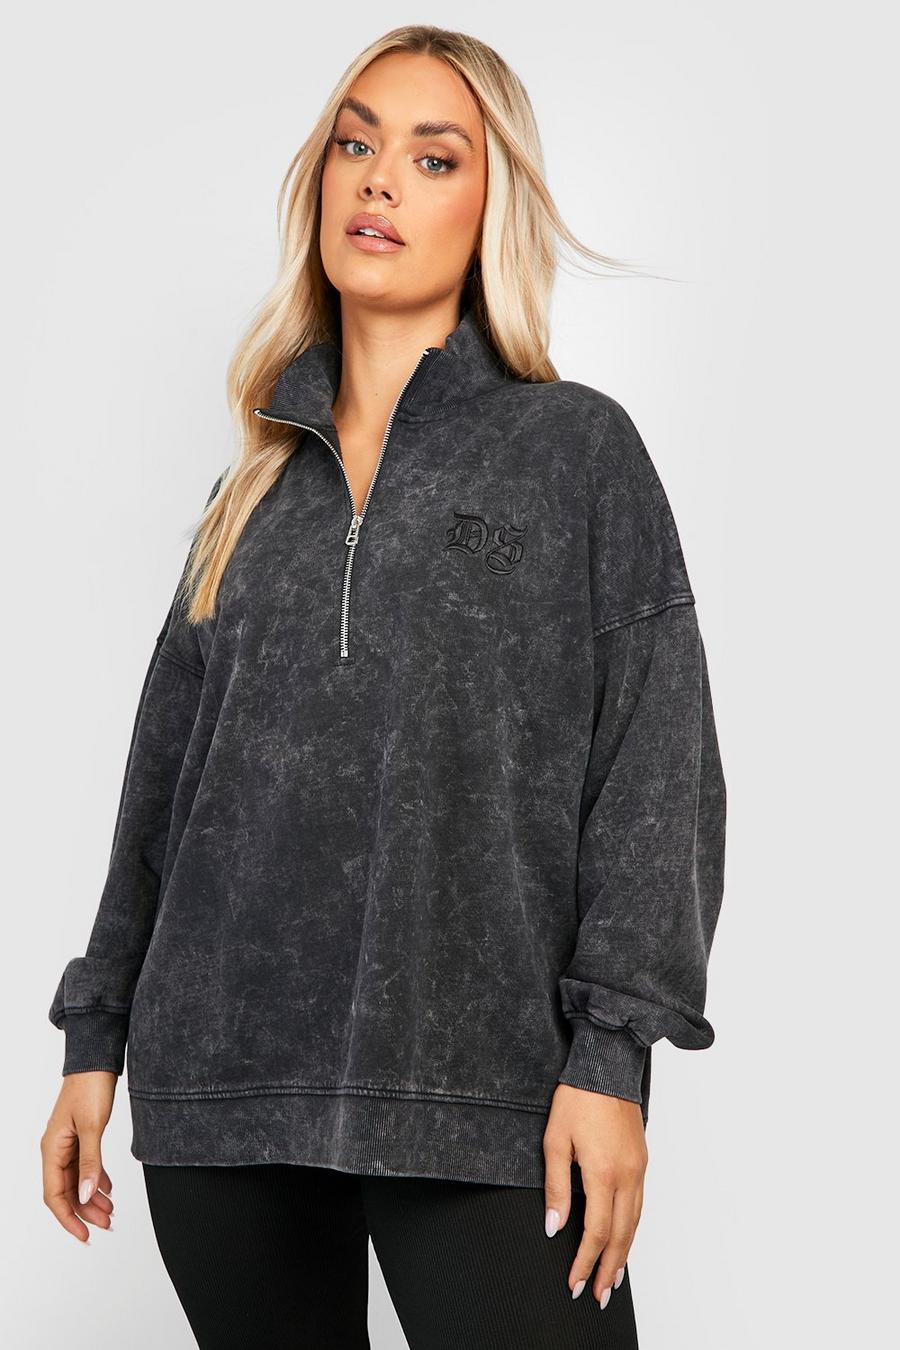 Charcoal grey Plus Acid Wash Embroidered Half Zip Sweater image number 1